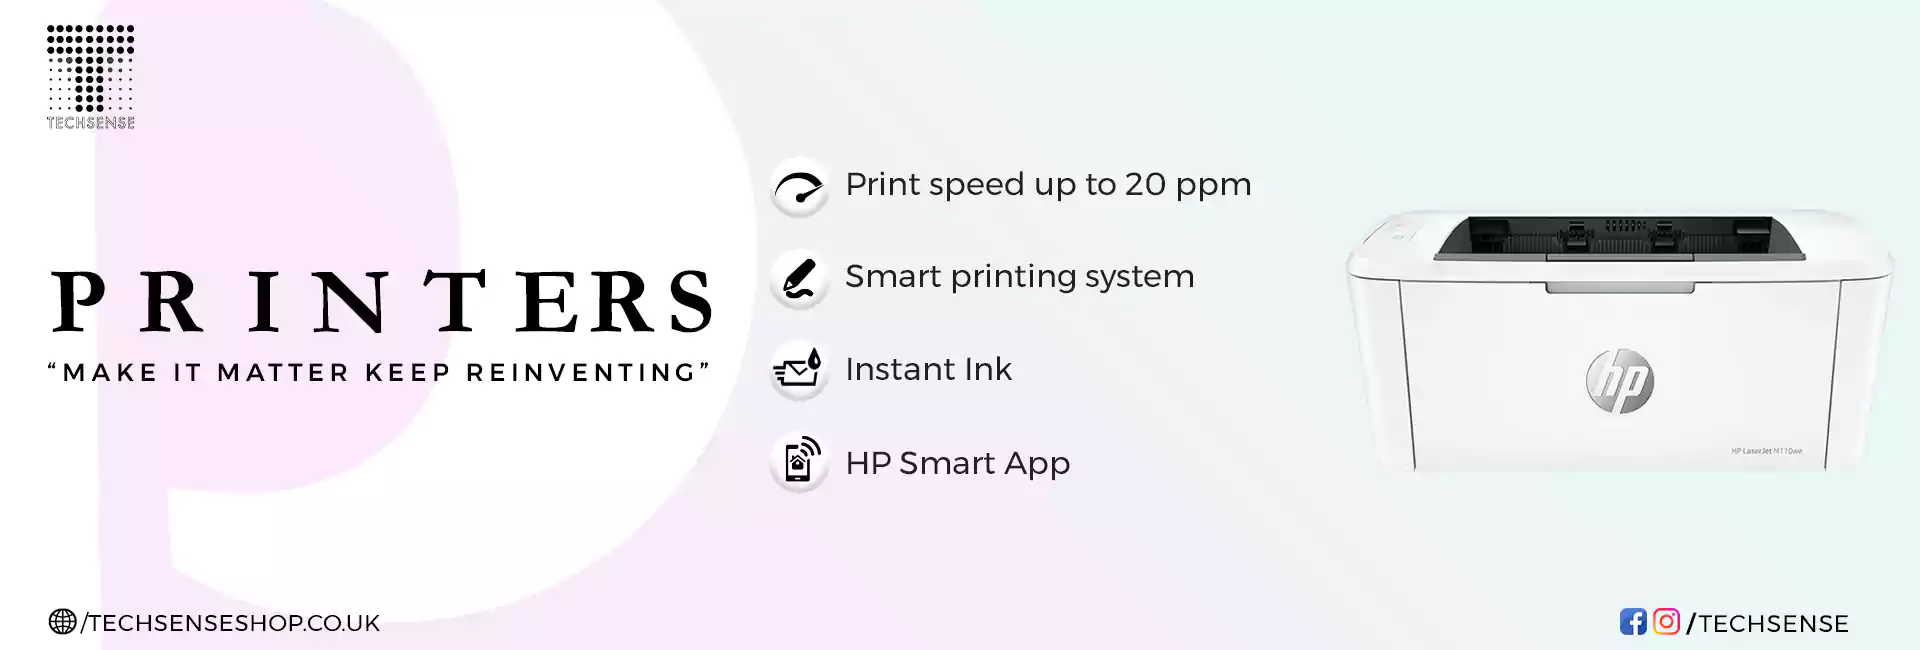 Printers & Scanners Deals